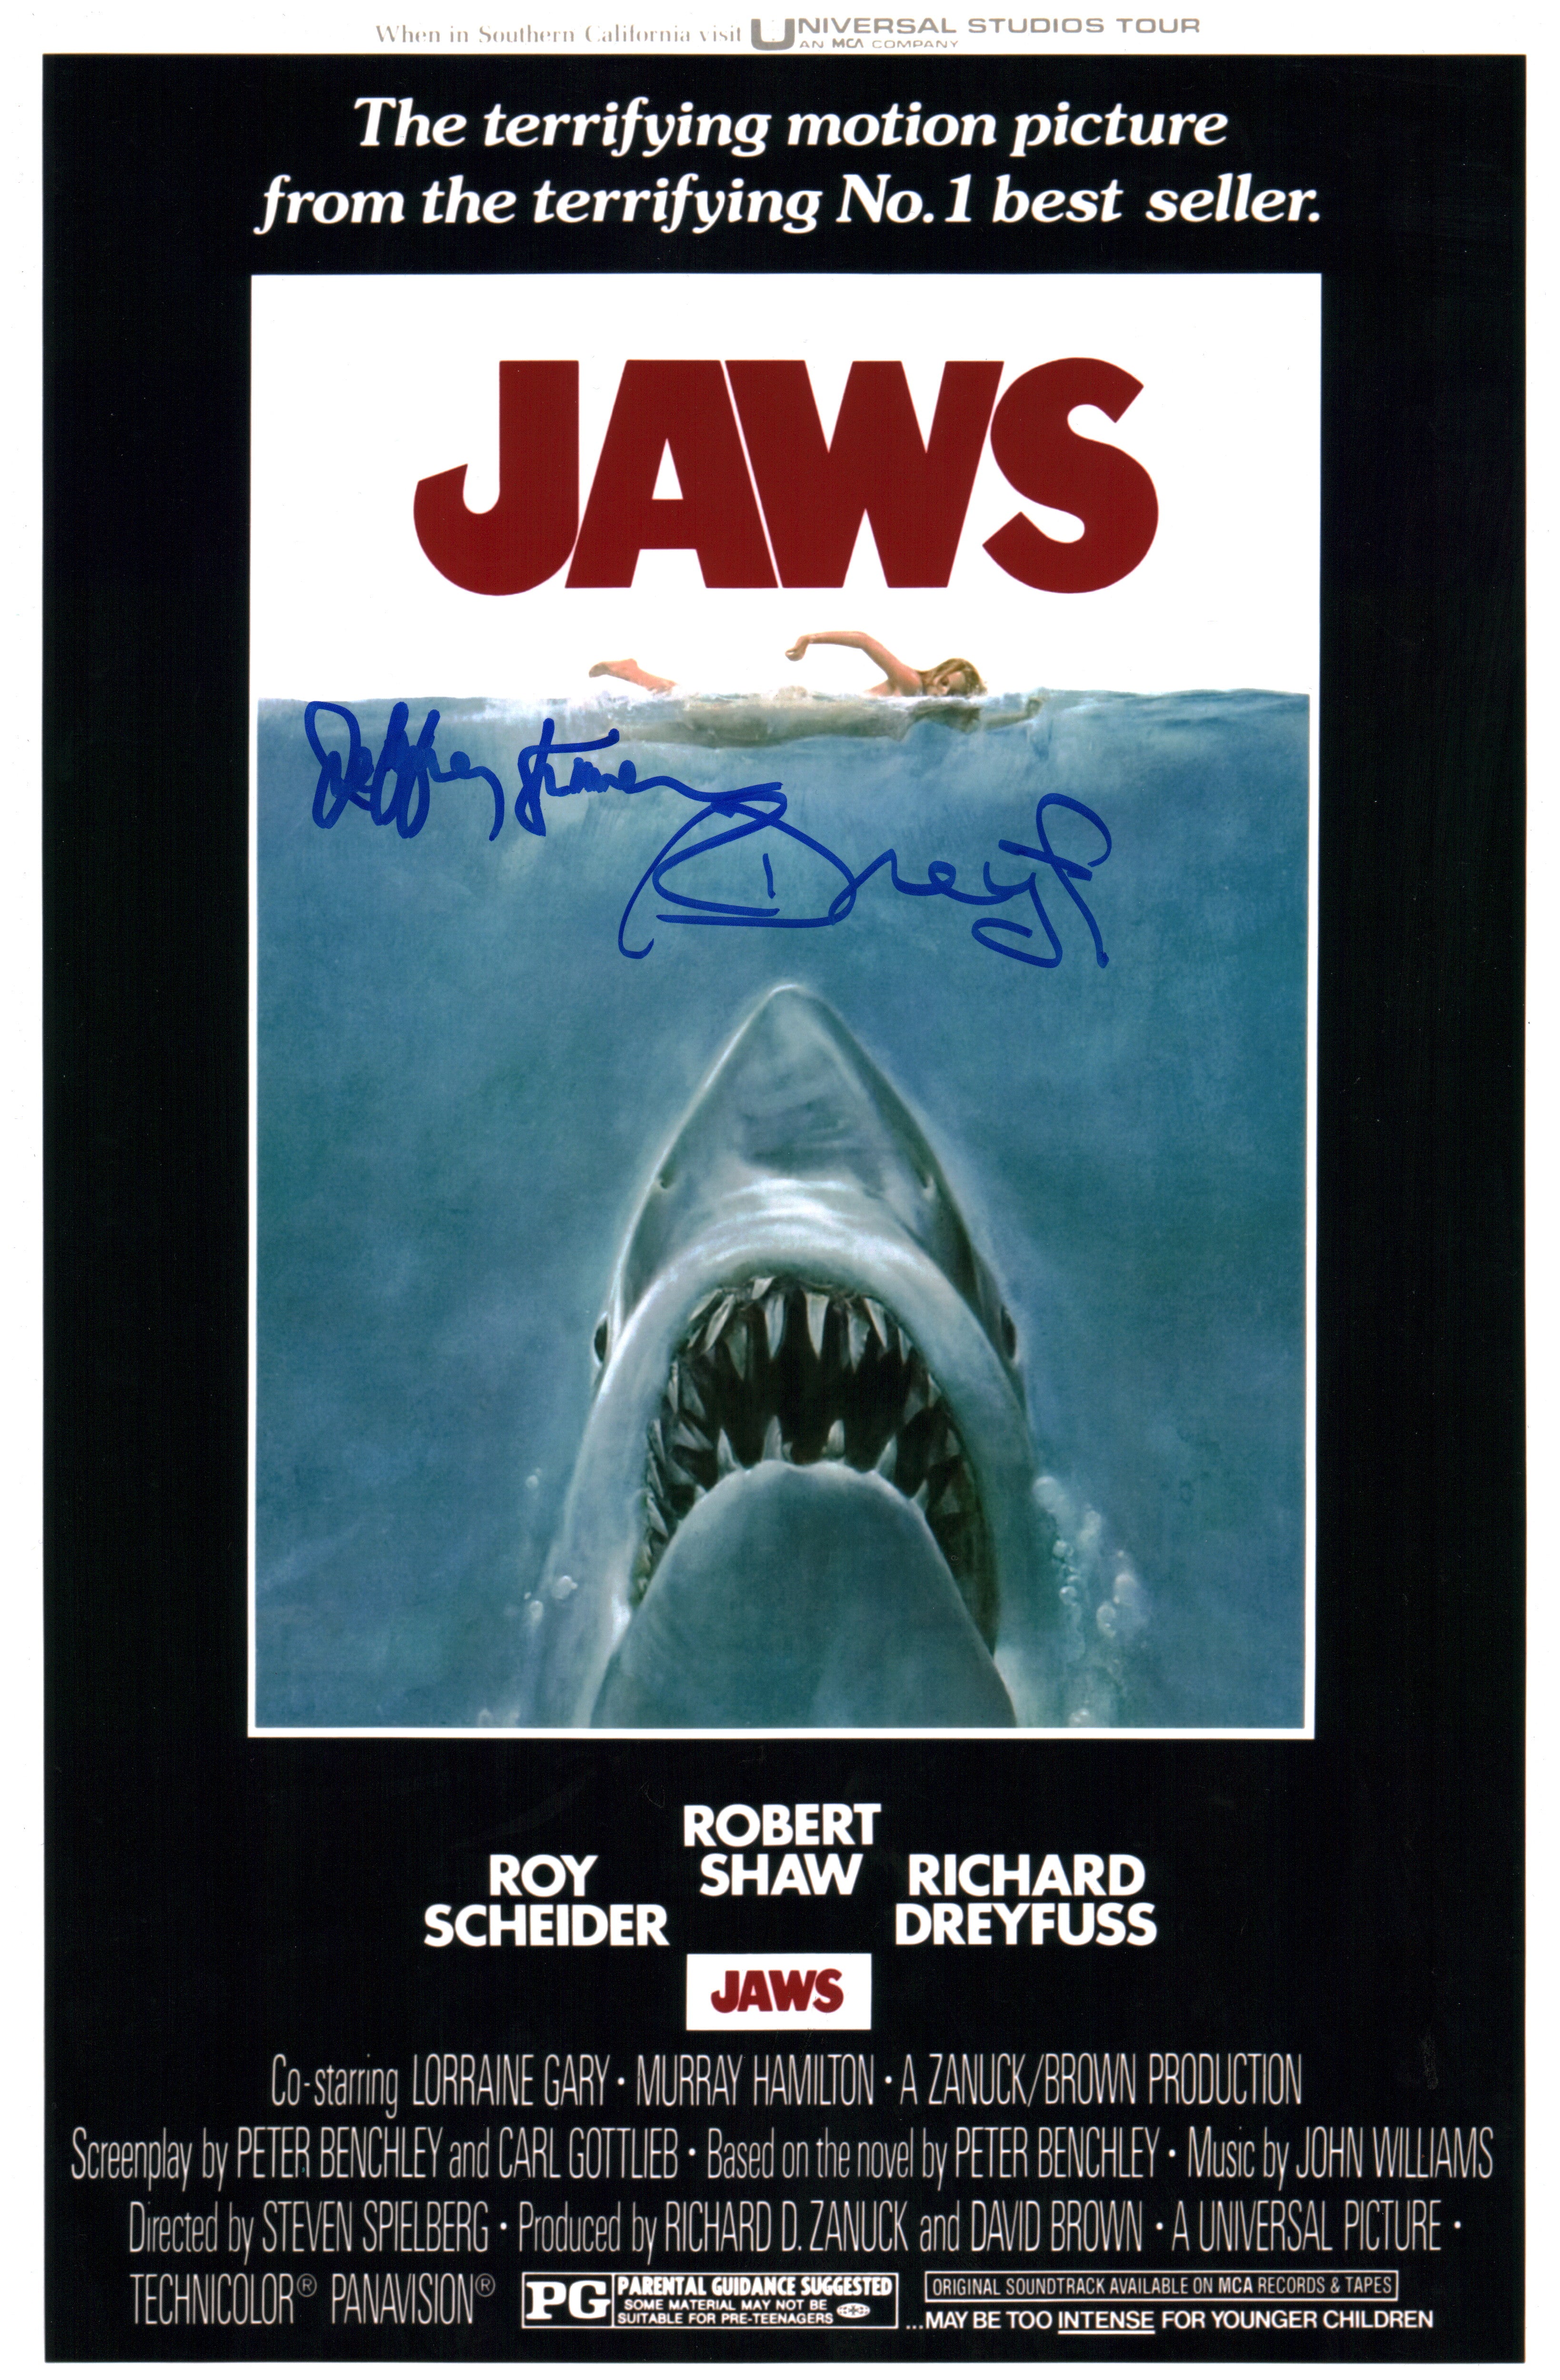 Jaws 11x17 Photo Cast x2 Signed Dreyfuss, Kramer Signed Mini Poster JSA Certified Autograph